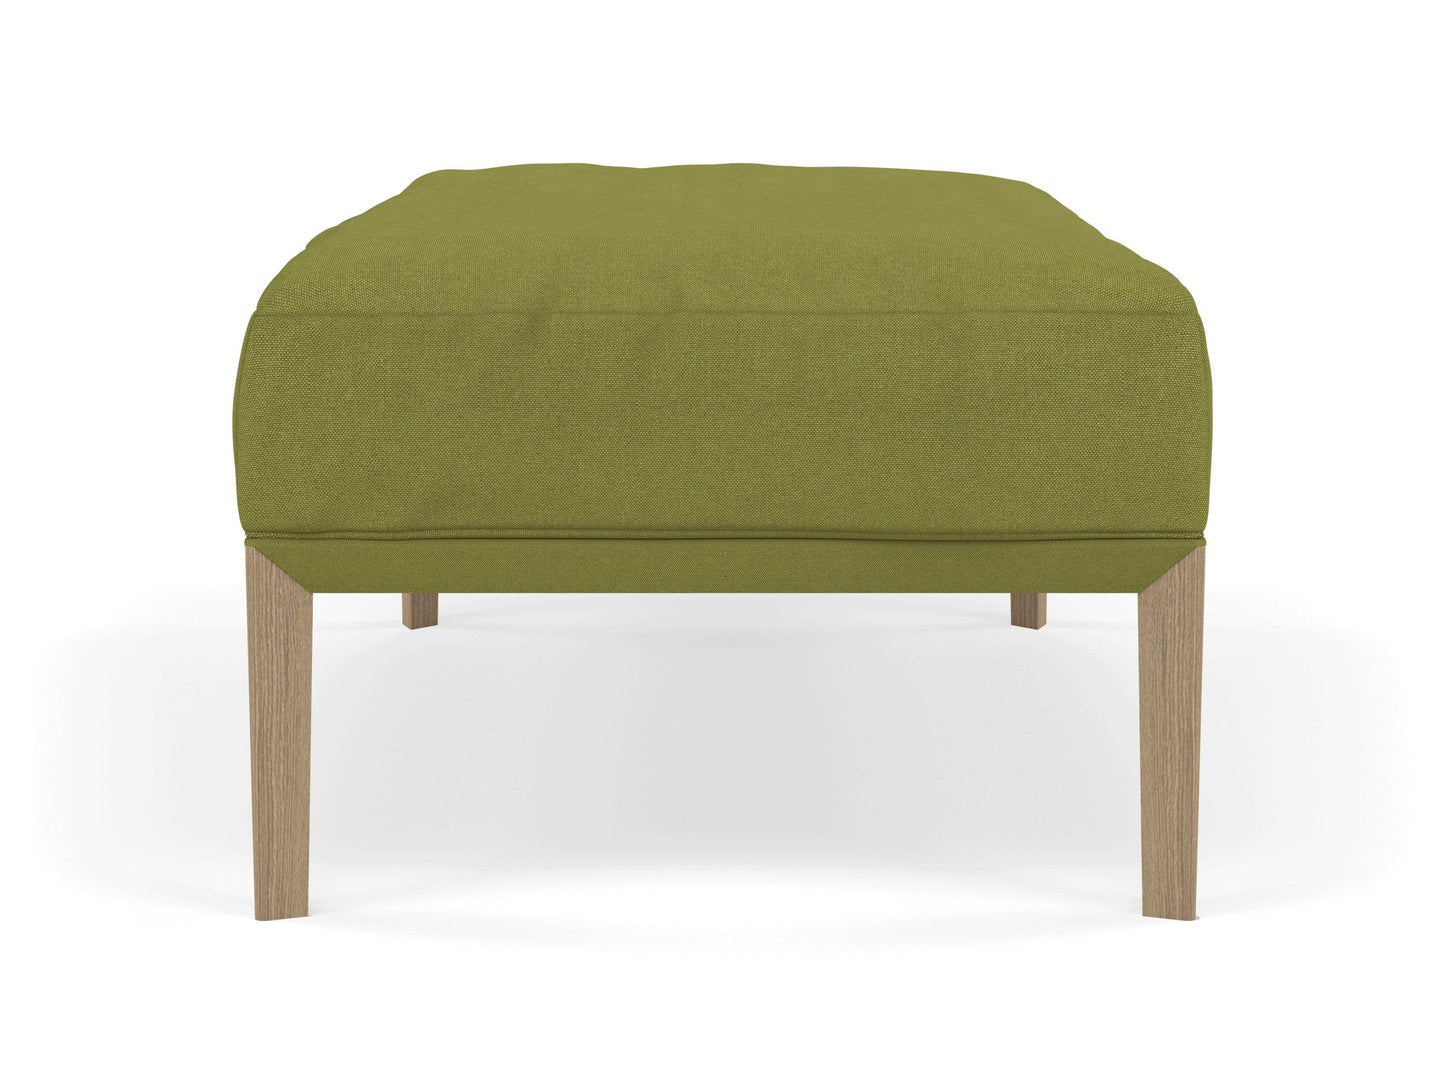 Modern Pouffe Footstool Ottoman Rectangular Seat 103x65cm in Lime Green Fabric-Distinct Designs (London) Ltd